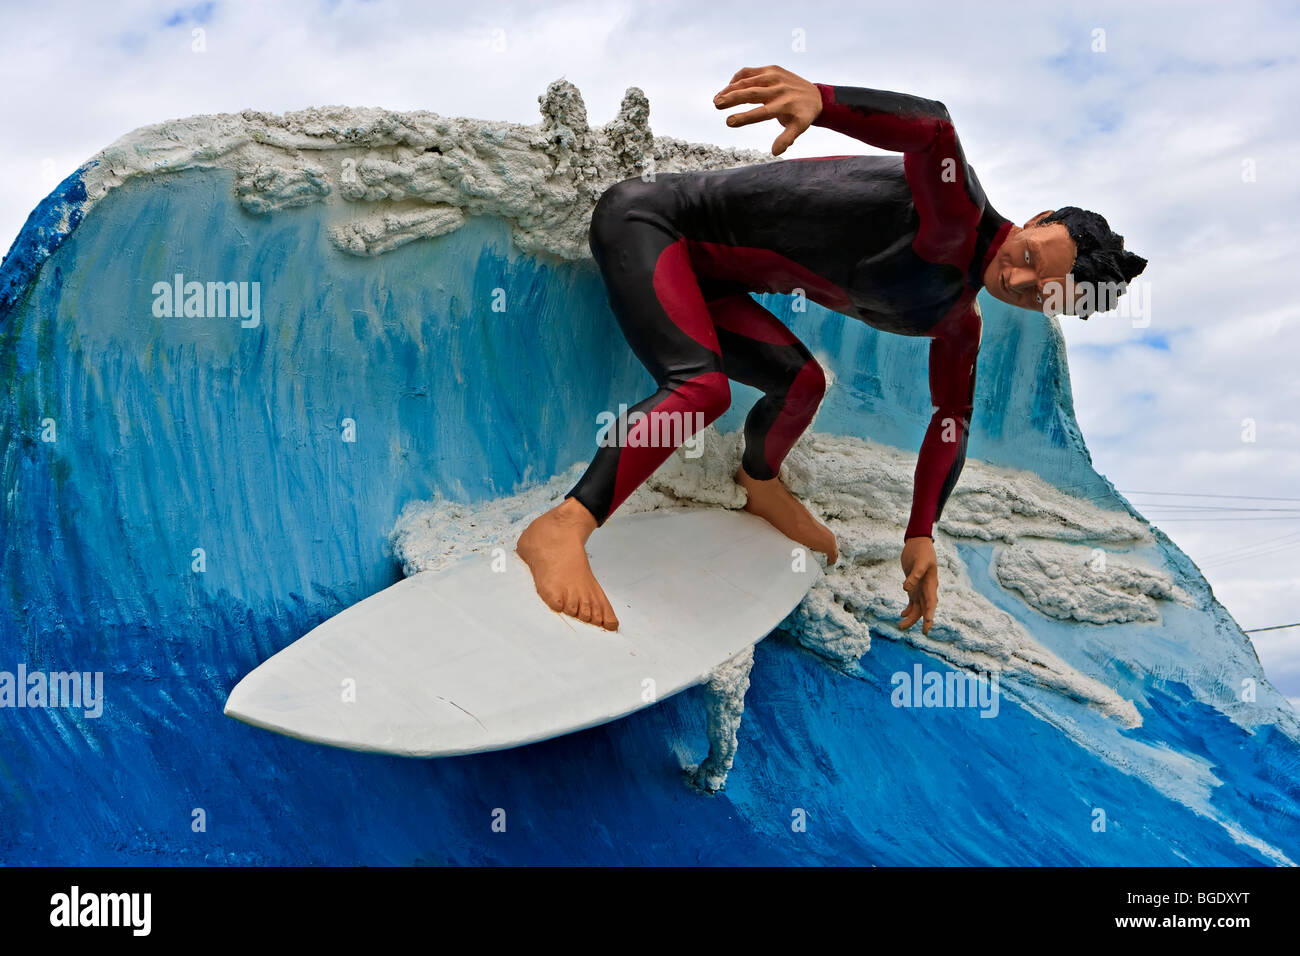 The Surfing Sculptor